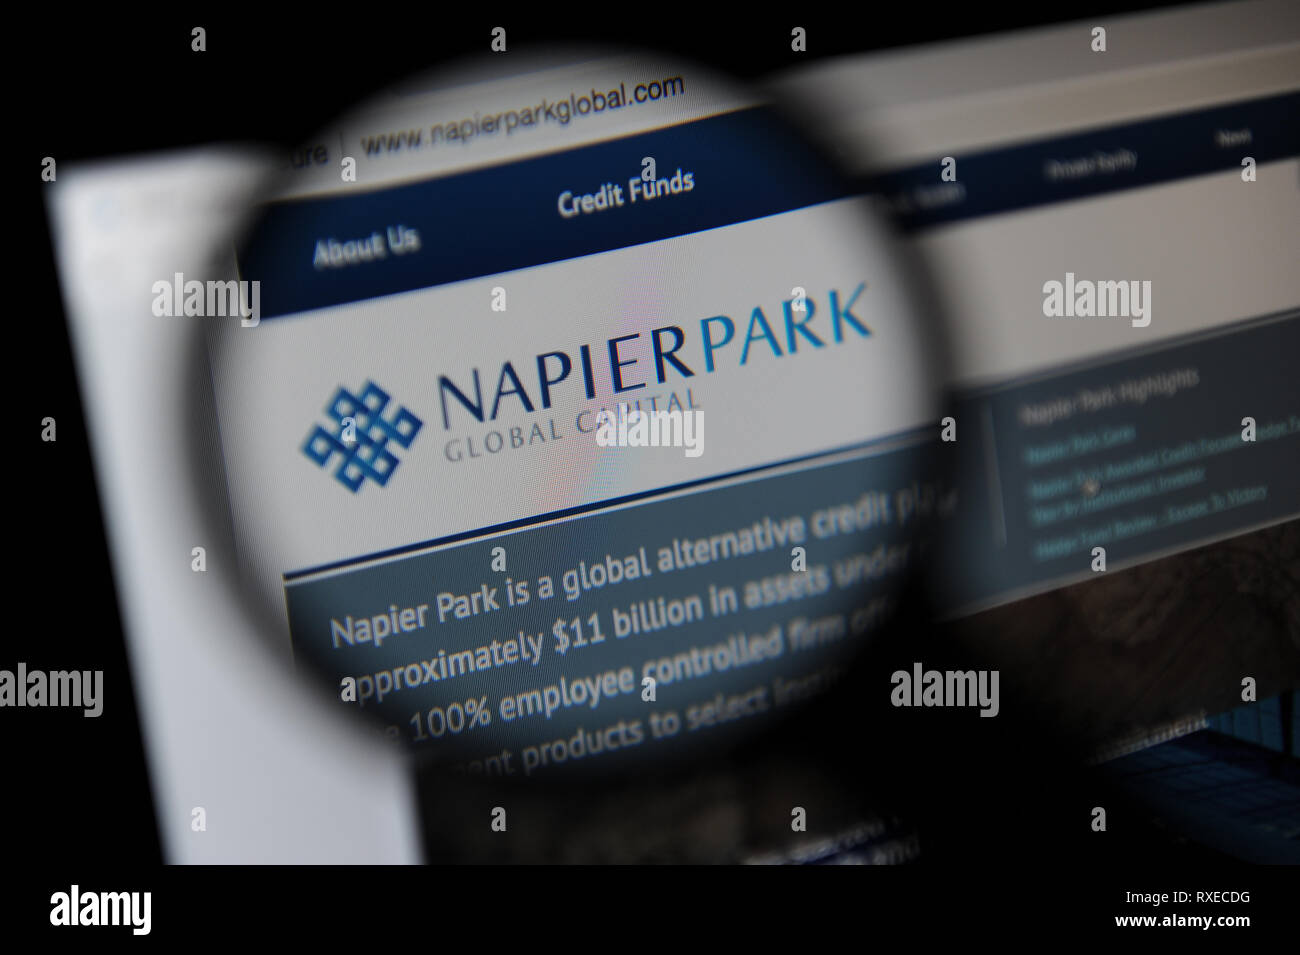 Napier Park Global Capital website seen through a magnifying glass Stock Photo